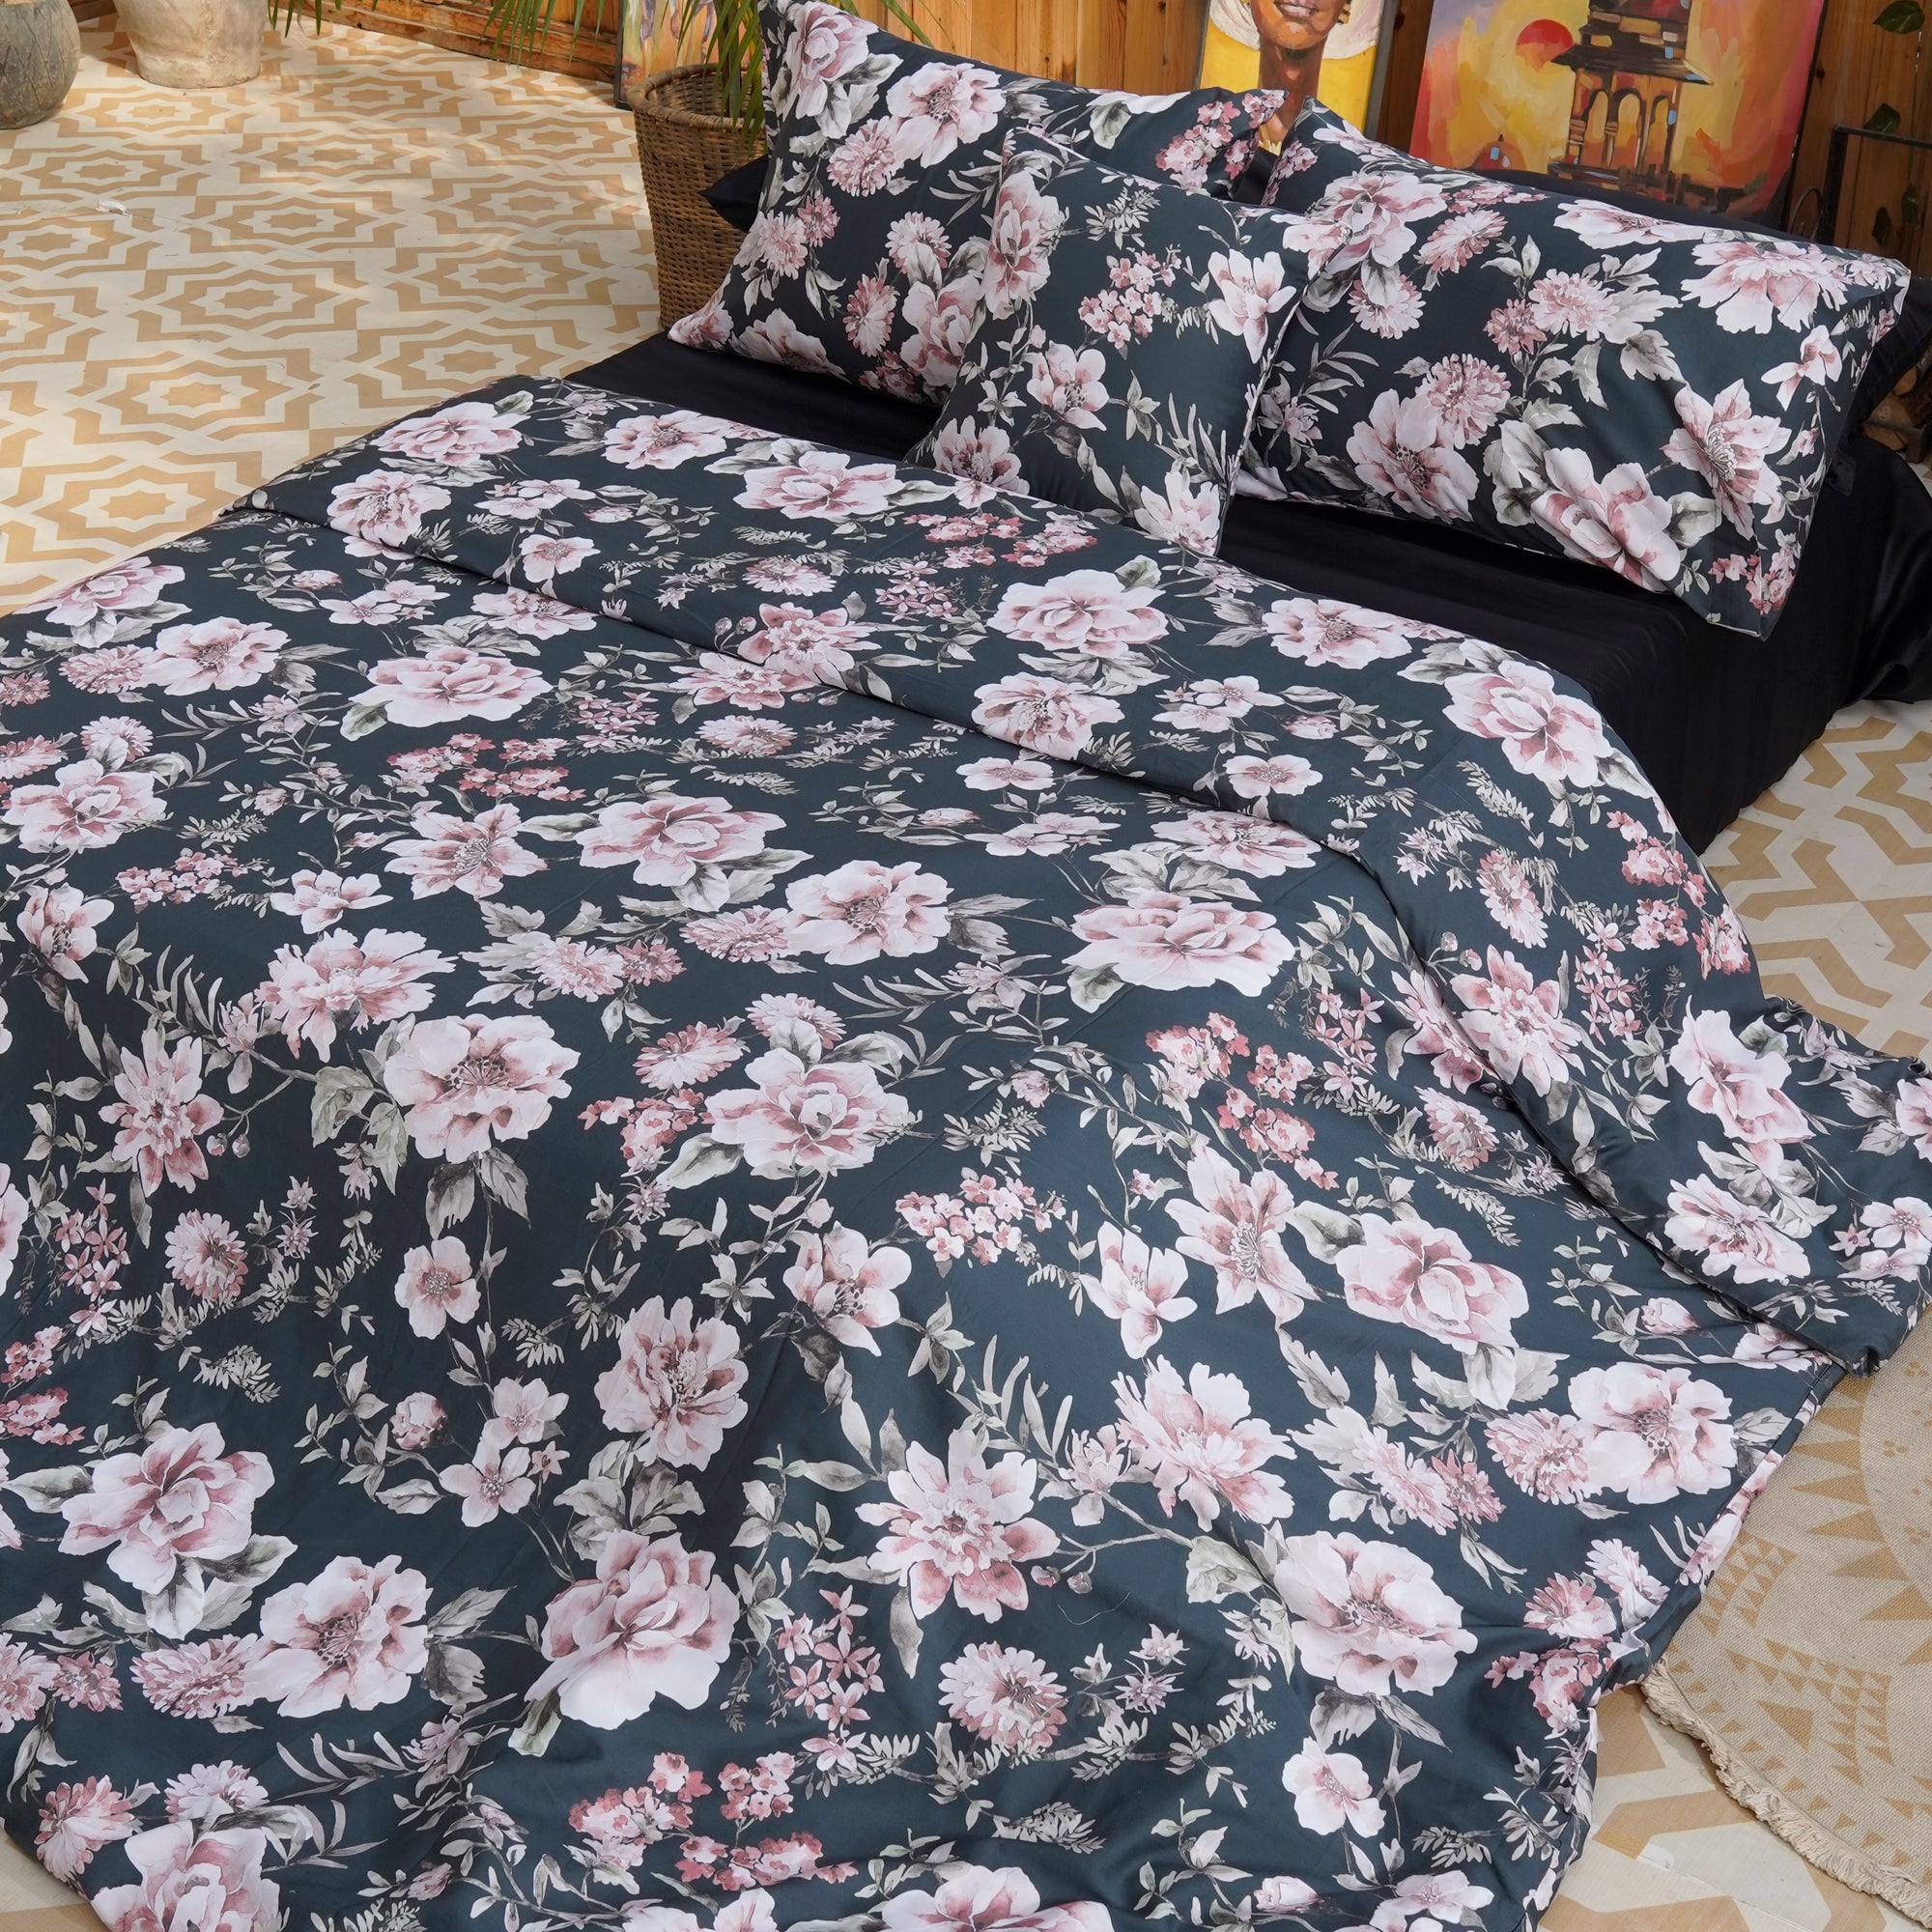 The Linen Company Bedding Shadowscape Duvet Cover Set